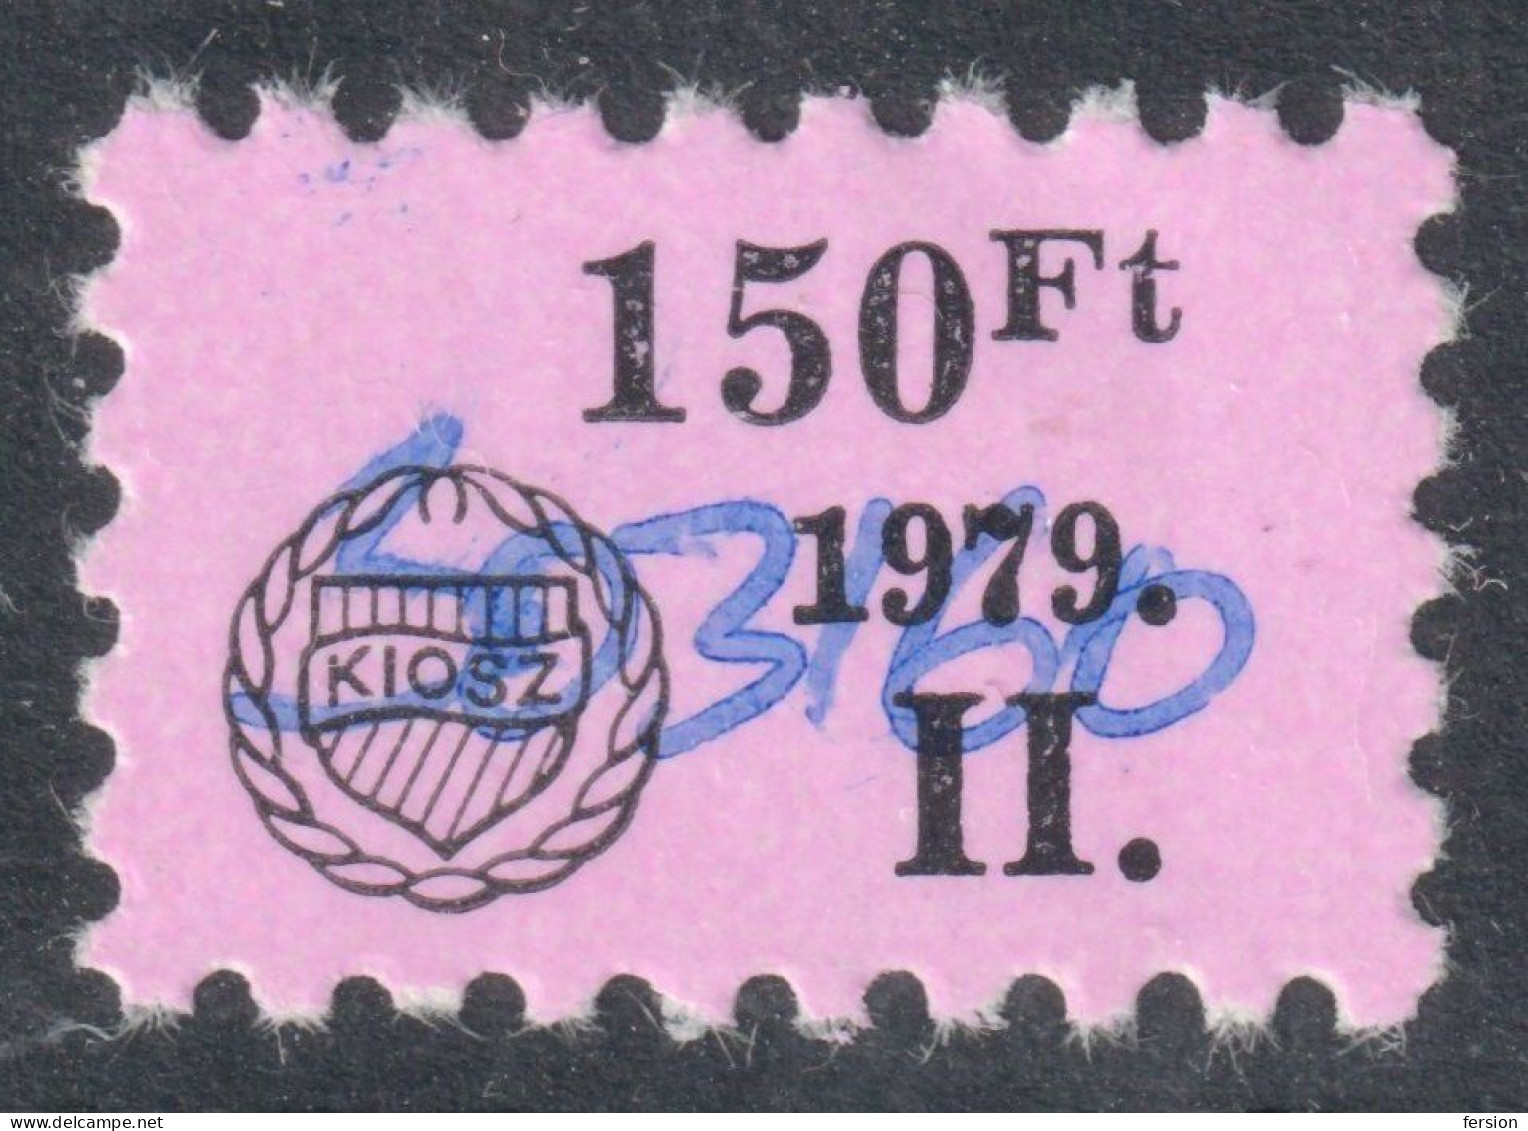 Hungarian Association Of Craftmen - Artisan KIOSZ / Charity Aid Member Label / Vignette / Cinderella - Used 1979 HUNGARY - Officials